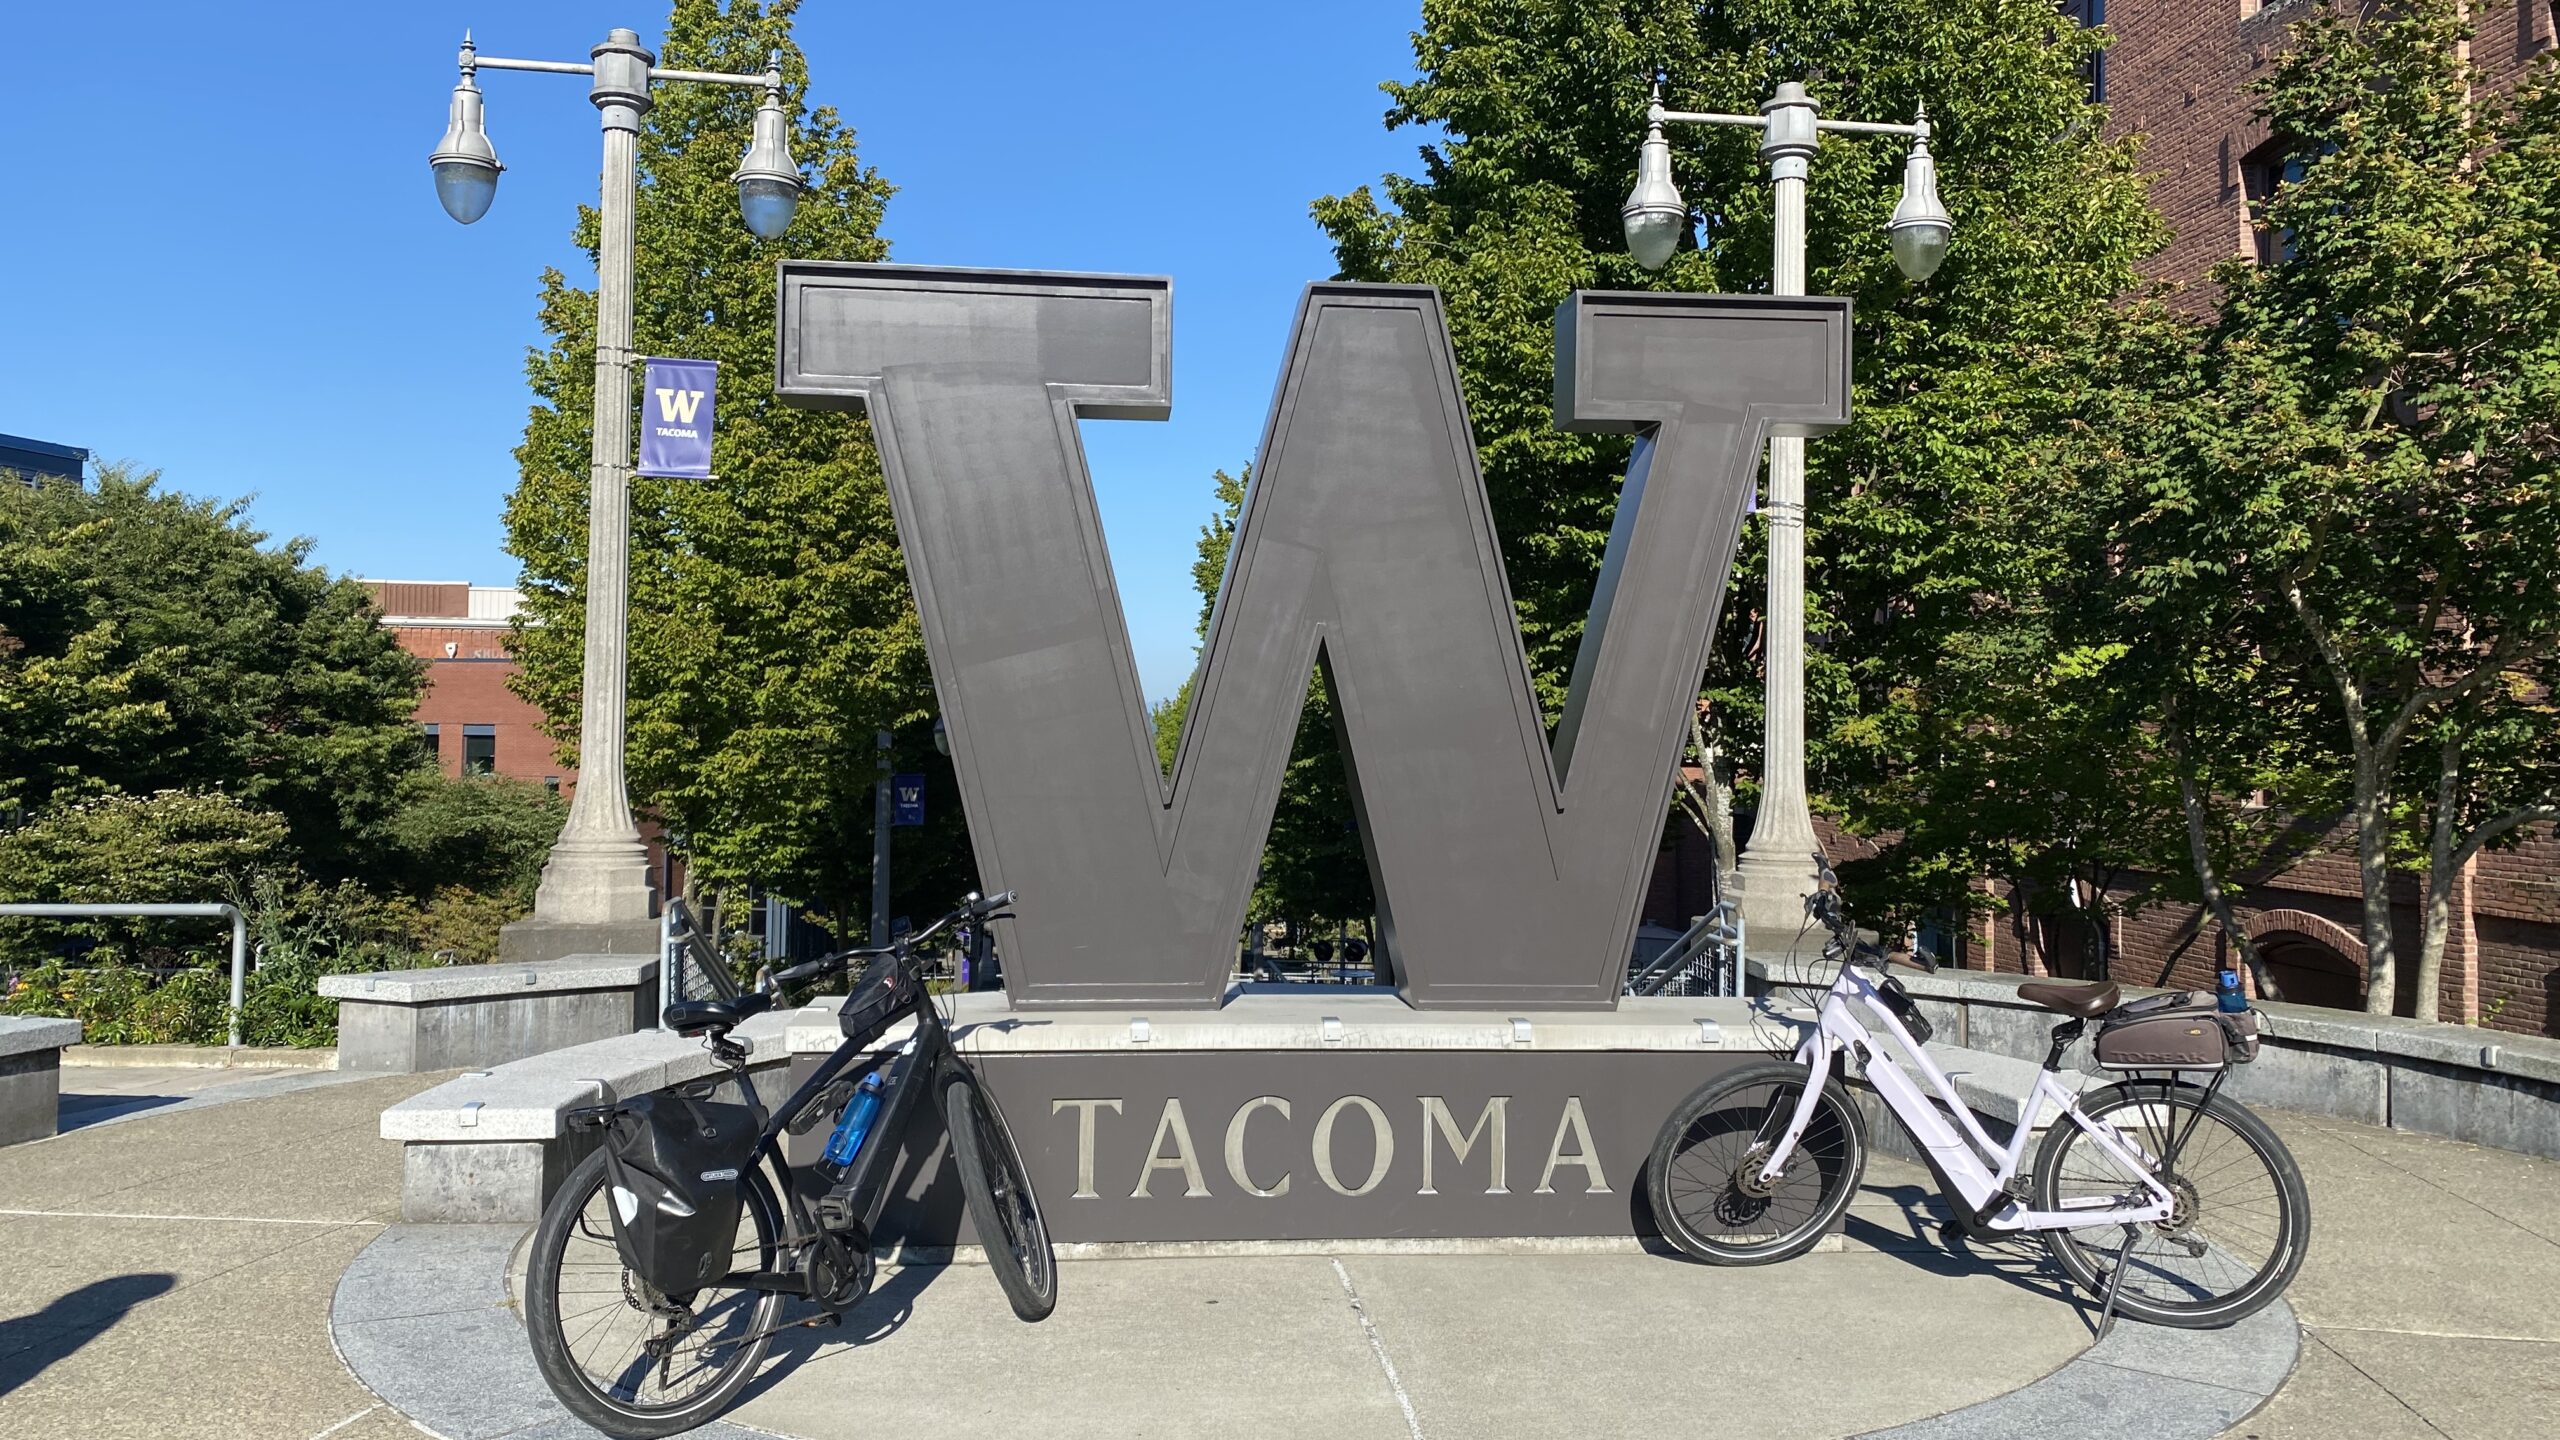 We Get Around, Tacoma